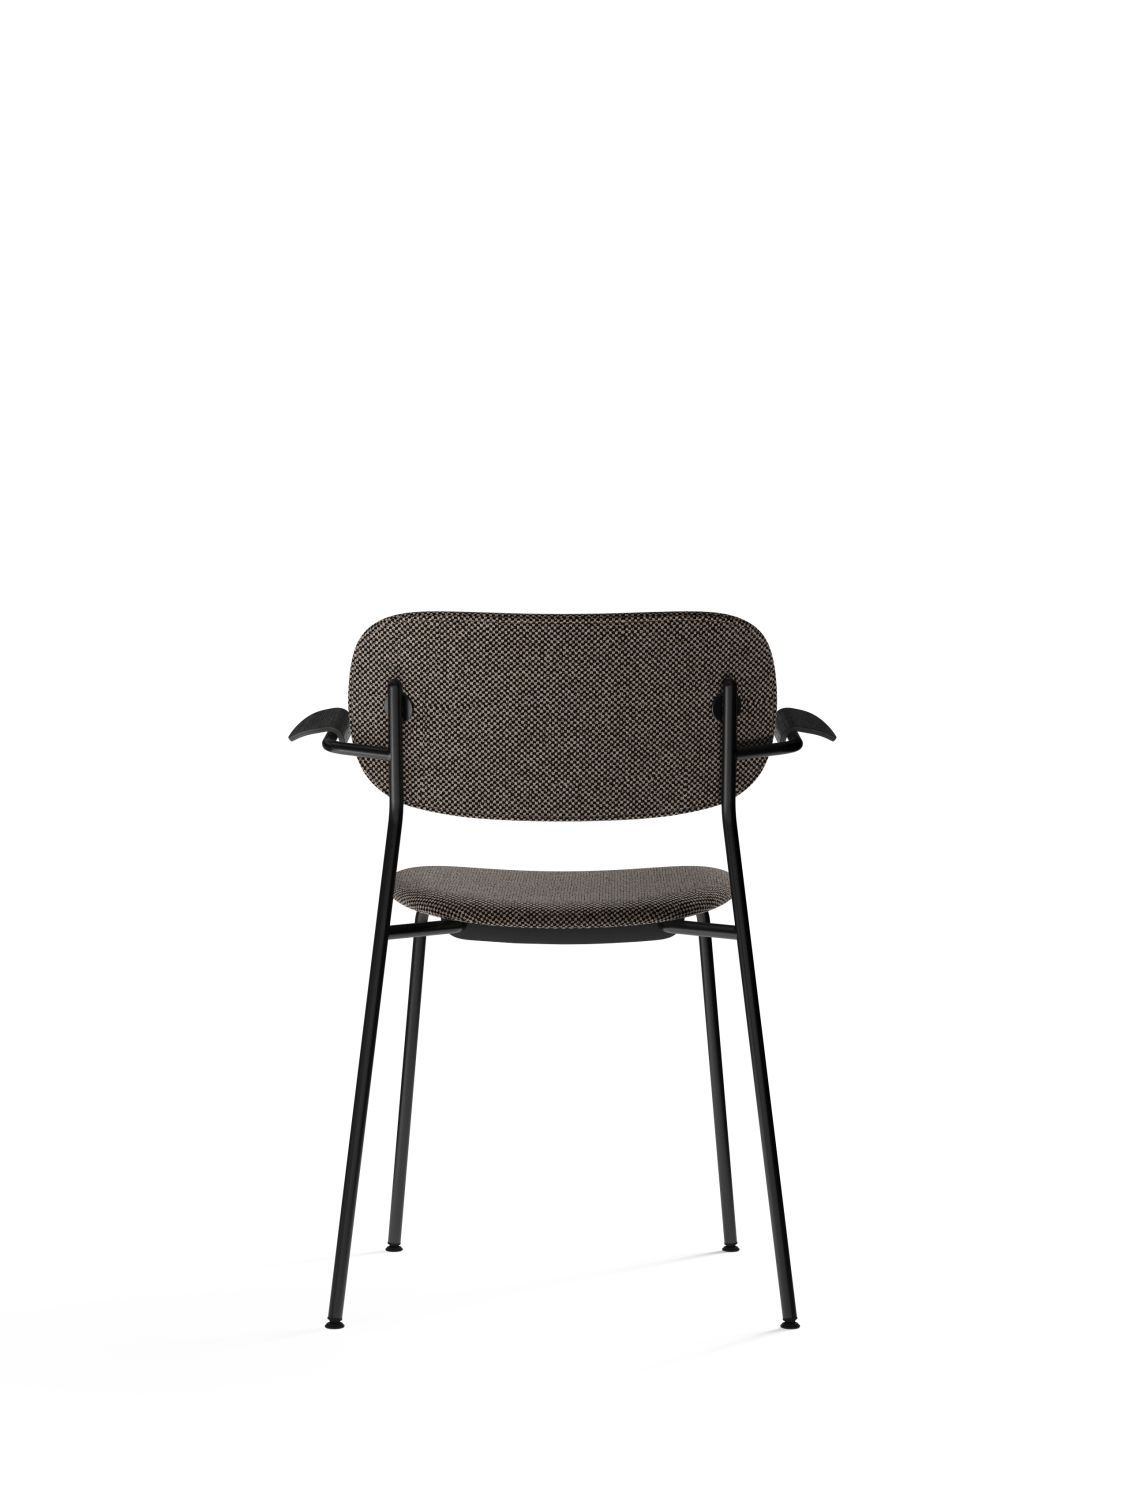 Co Dining Chair Stuhl Holz Metall Grau